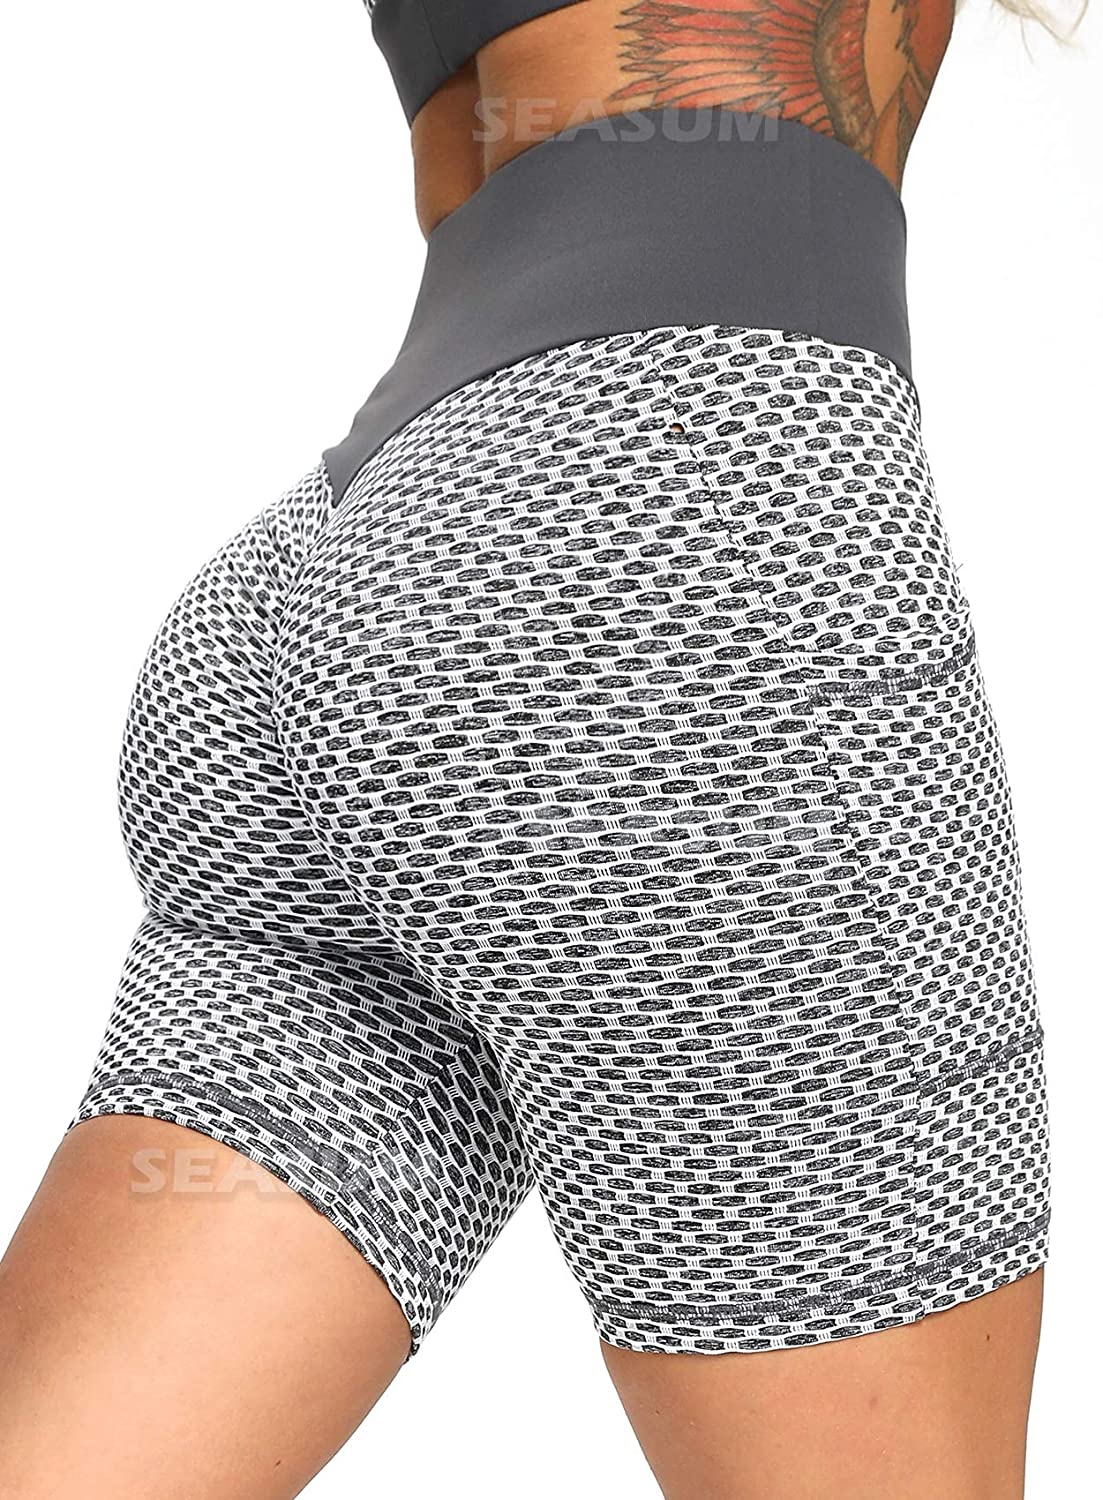 SEASUM Women Workout Shorts Brazilian Textured Booty Leggings